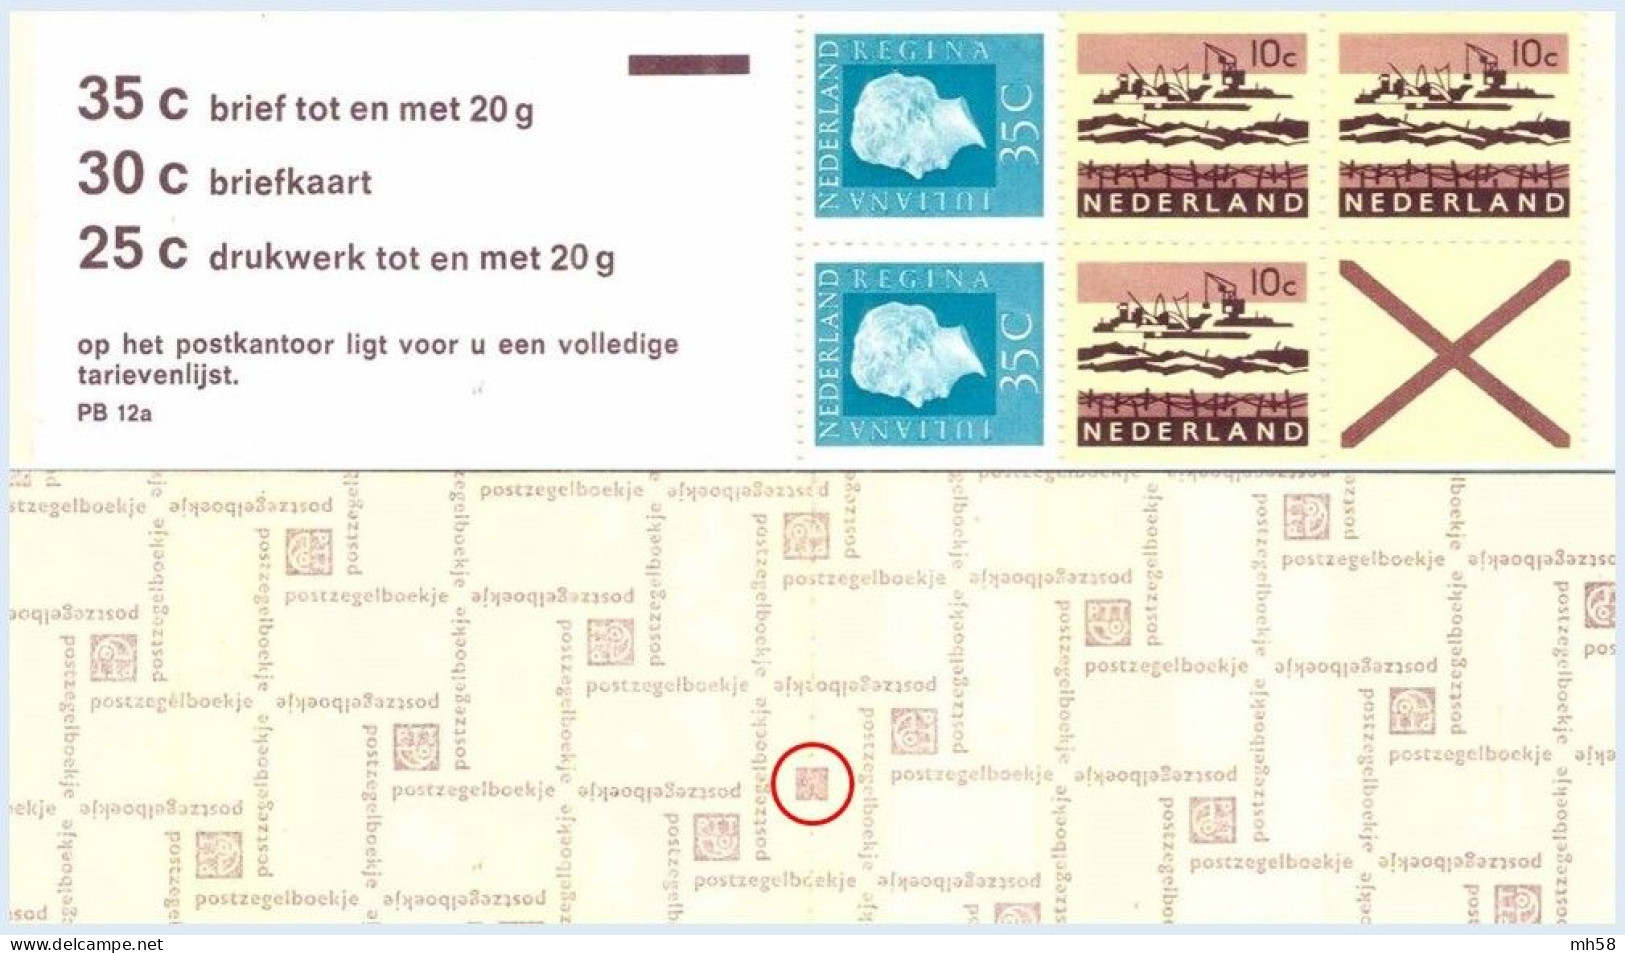 PAYS-BAS NEDERLAND 1972 - Carnet / Booklet / MH Indice PB 12a - 1 G Juliana / Travaux Du Delta - YT C 971 / MI MH 13 - Libretti